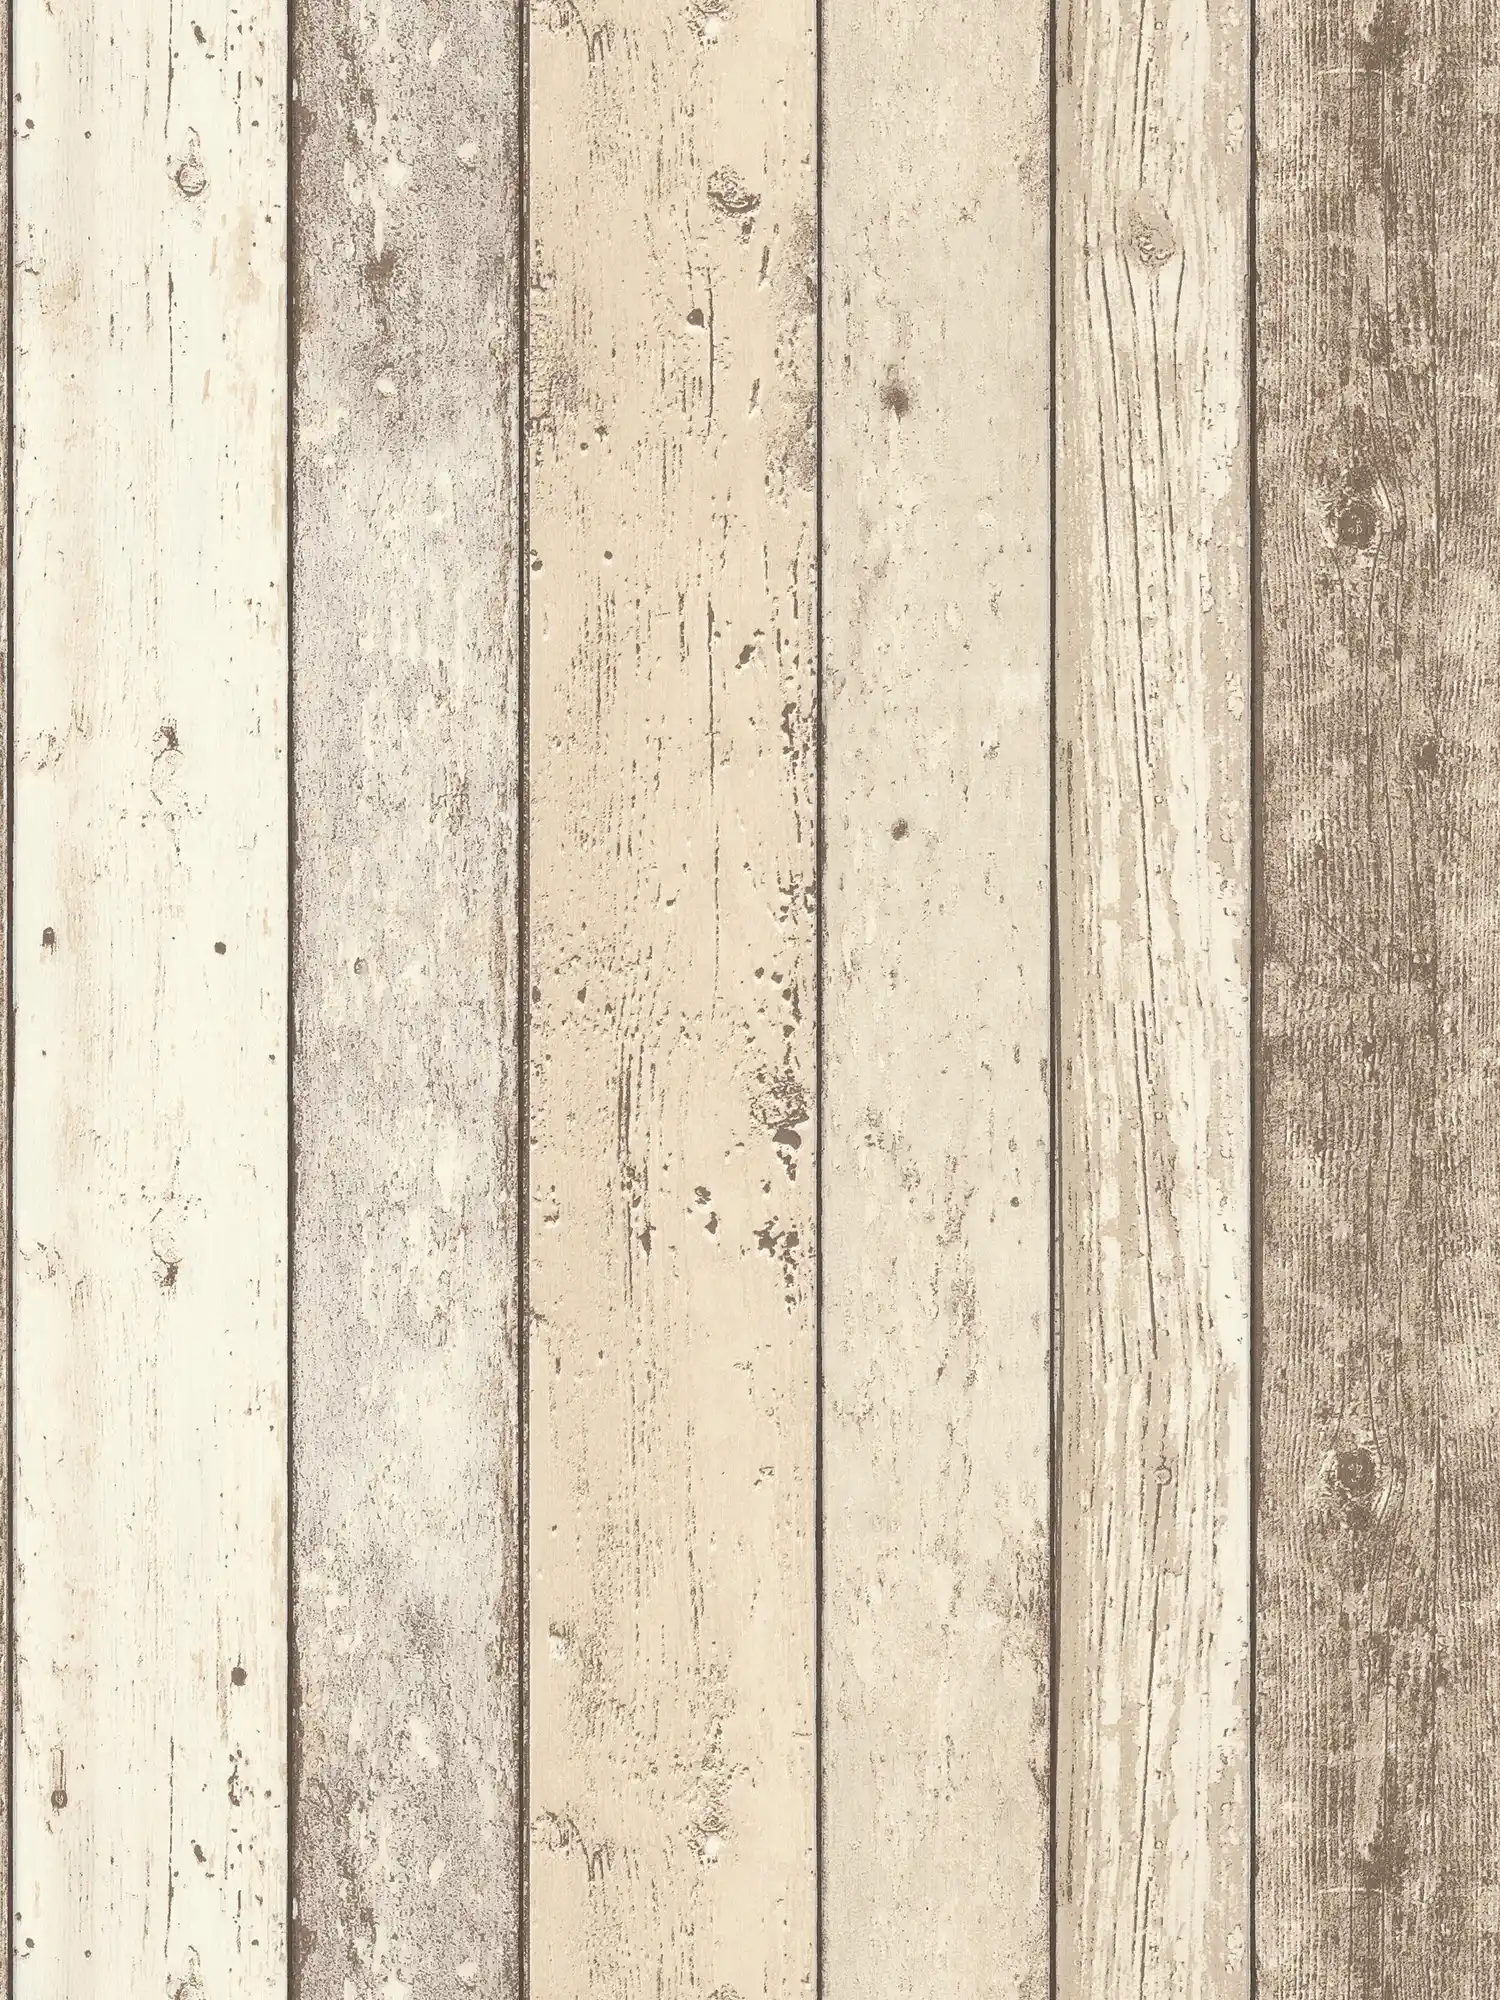 Rustikale Bretter-Tapete mit Holzbrettern im Used-Look – Beige, Braun, Weiß
